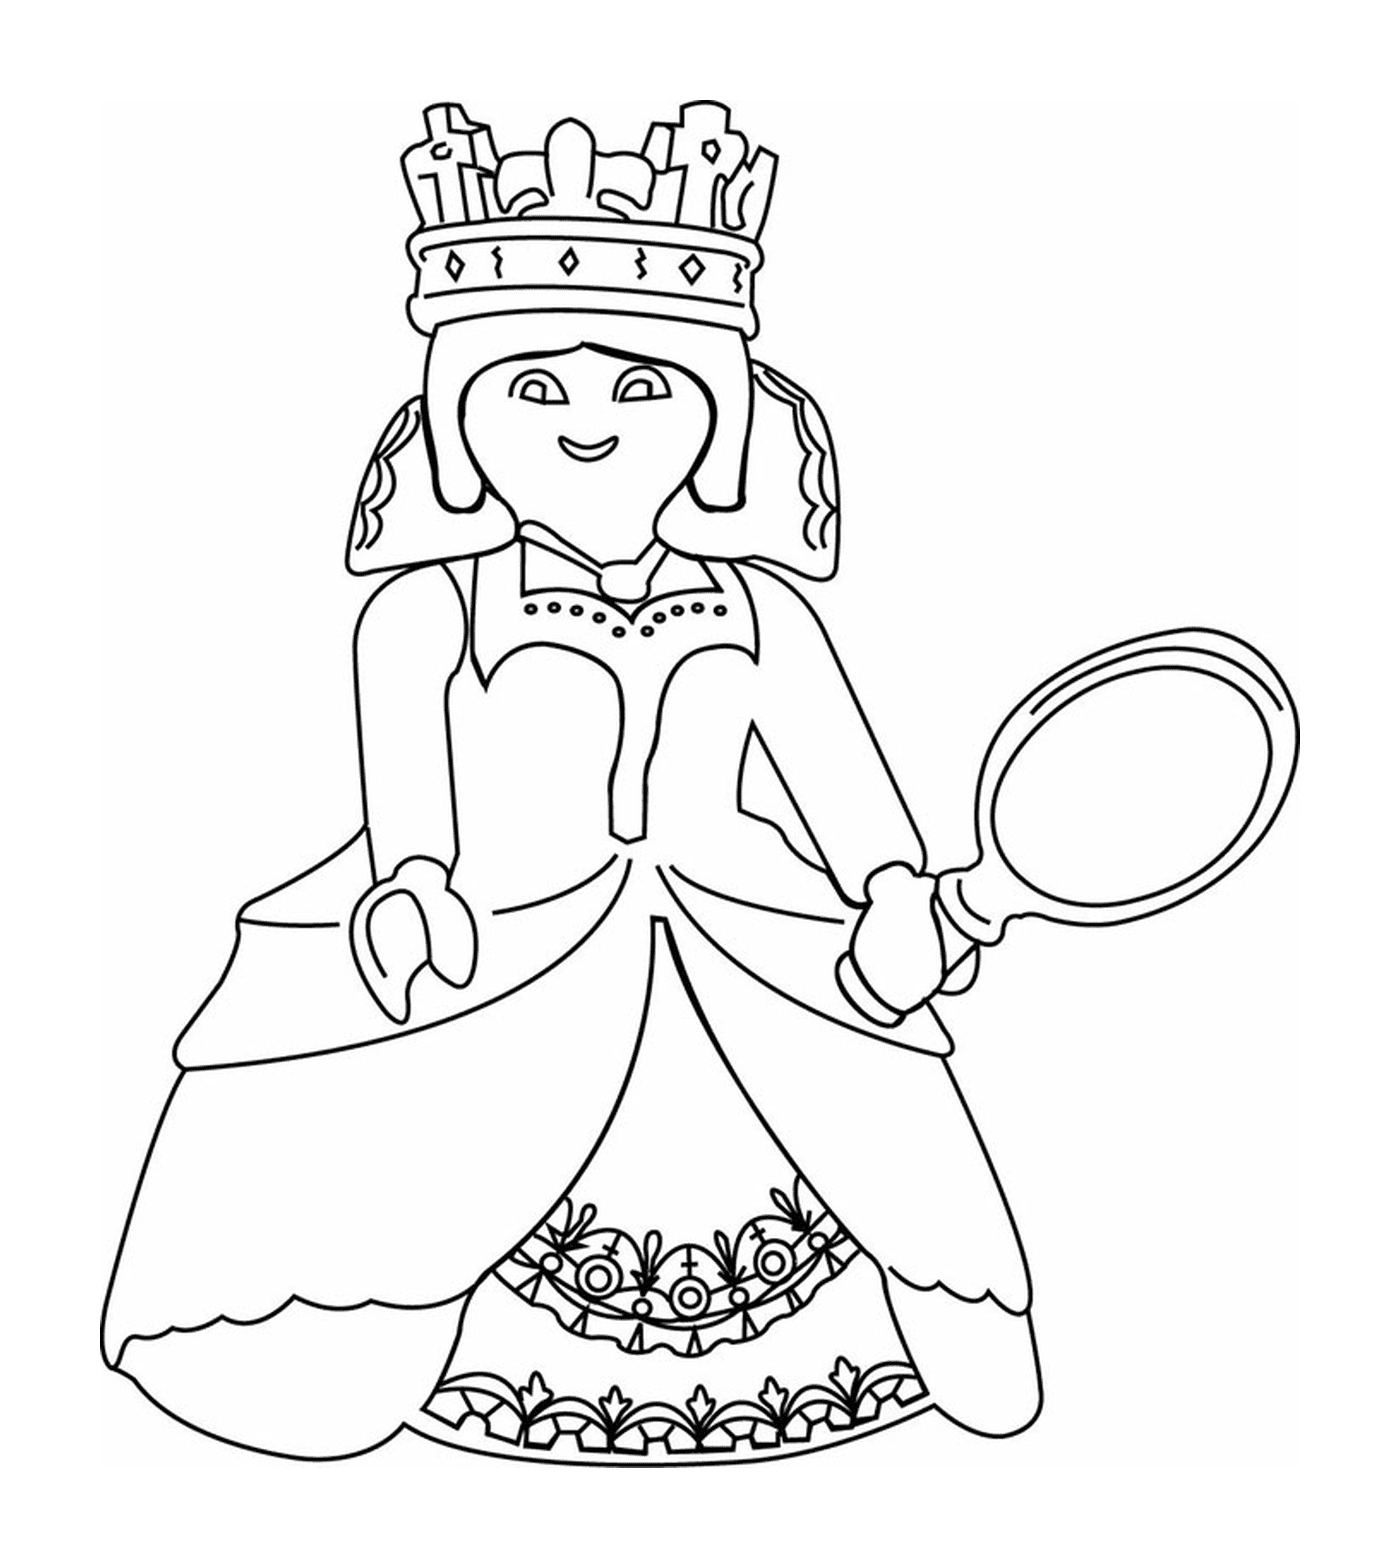  Woman holding a tennis racket 